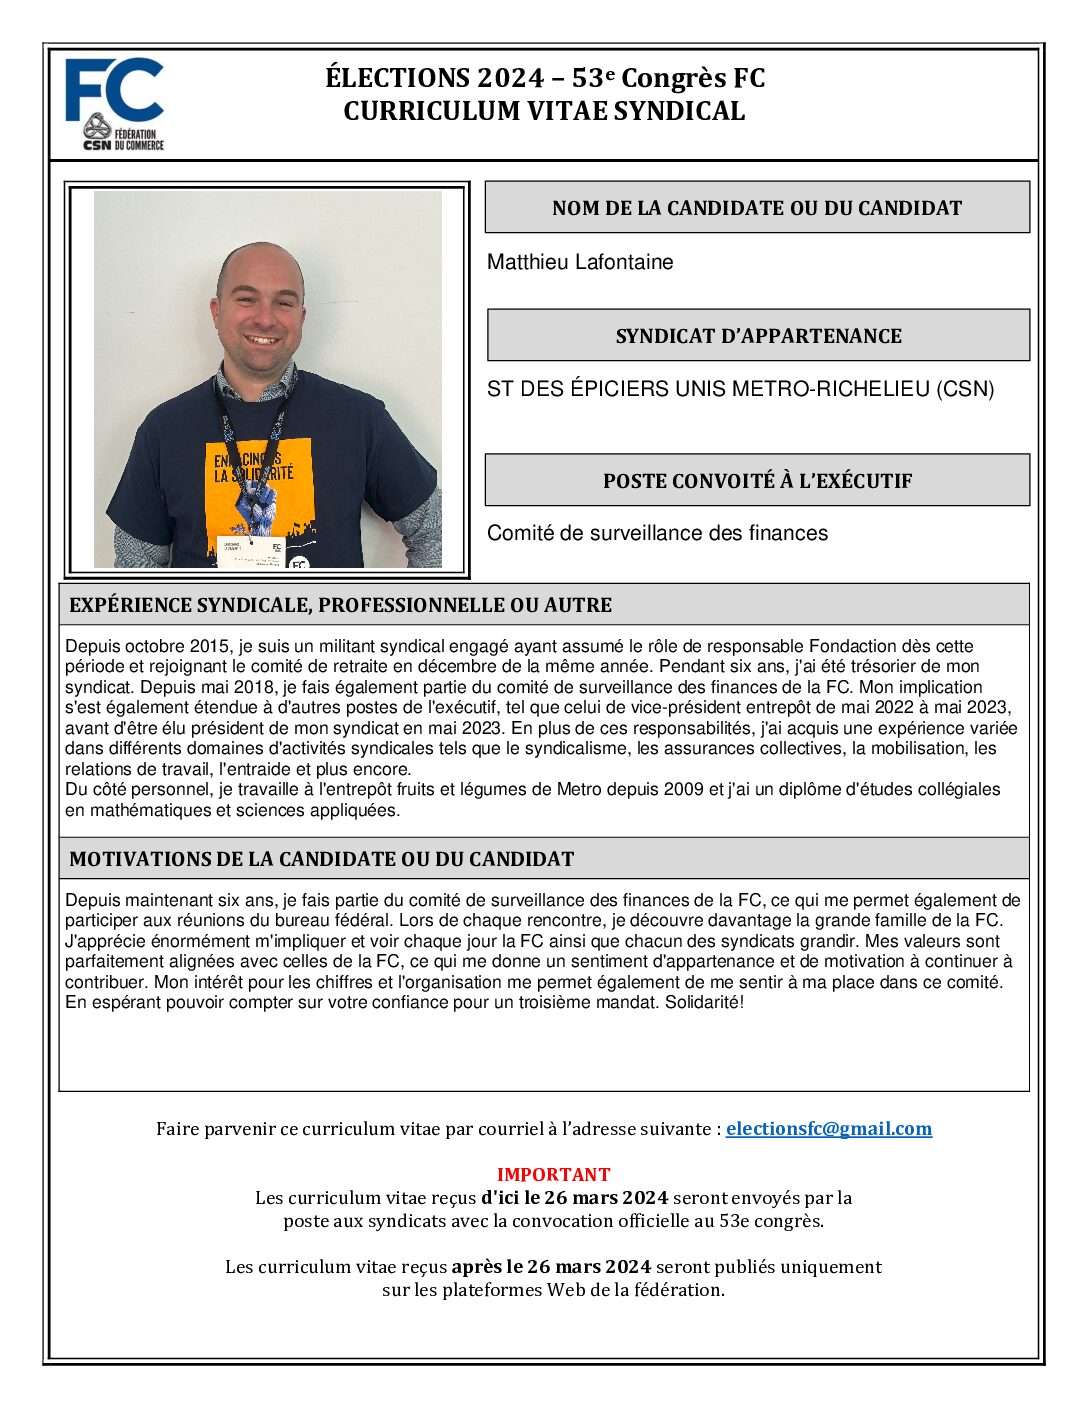 CV Matthieu Lafontaine